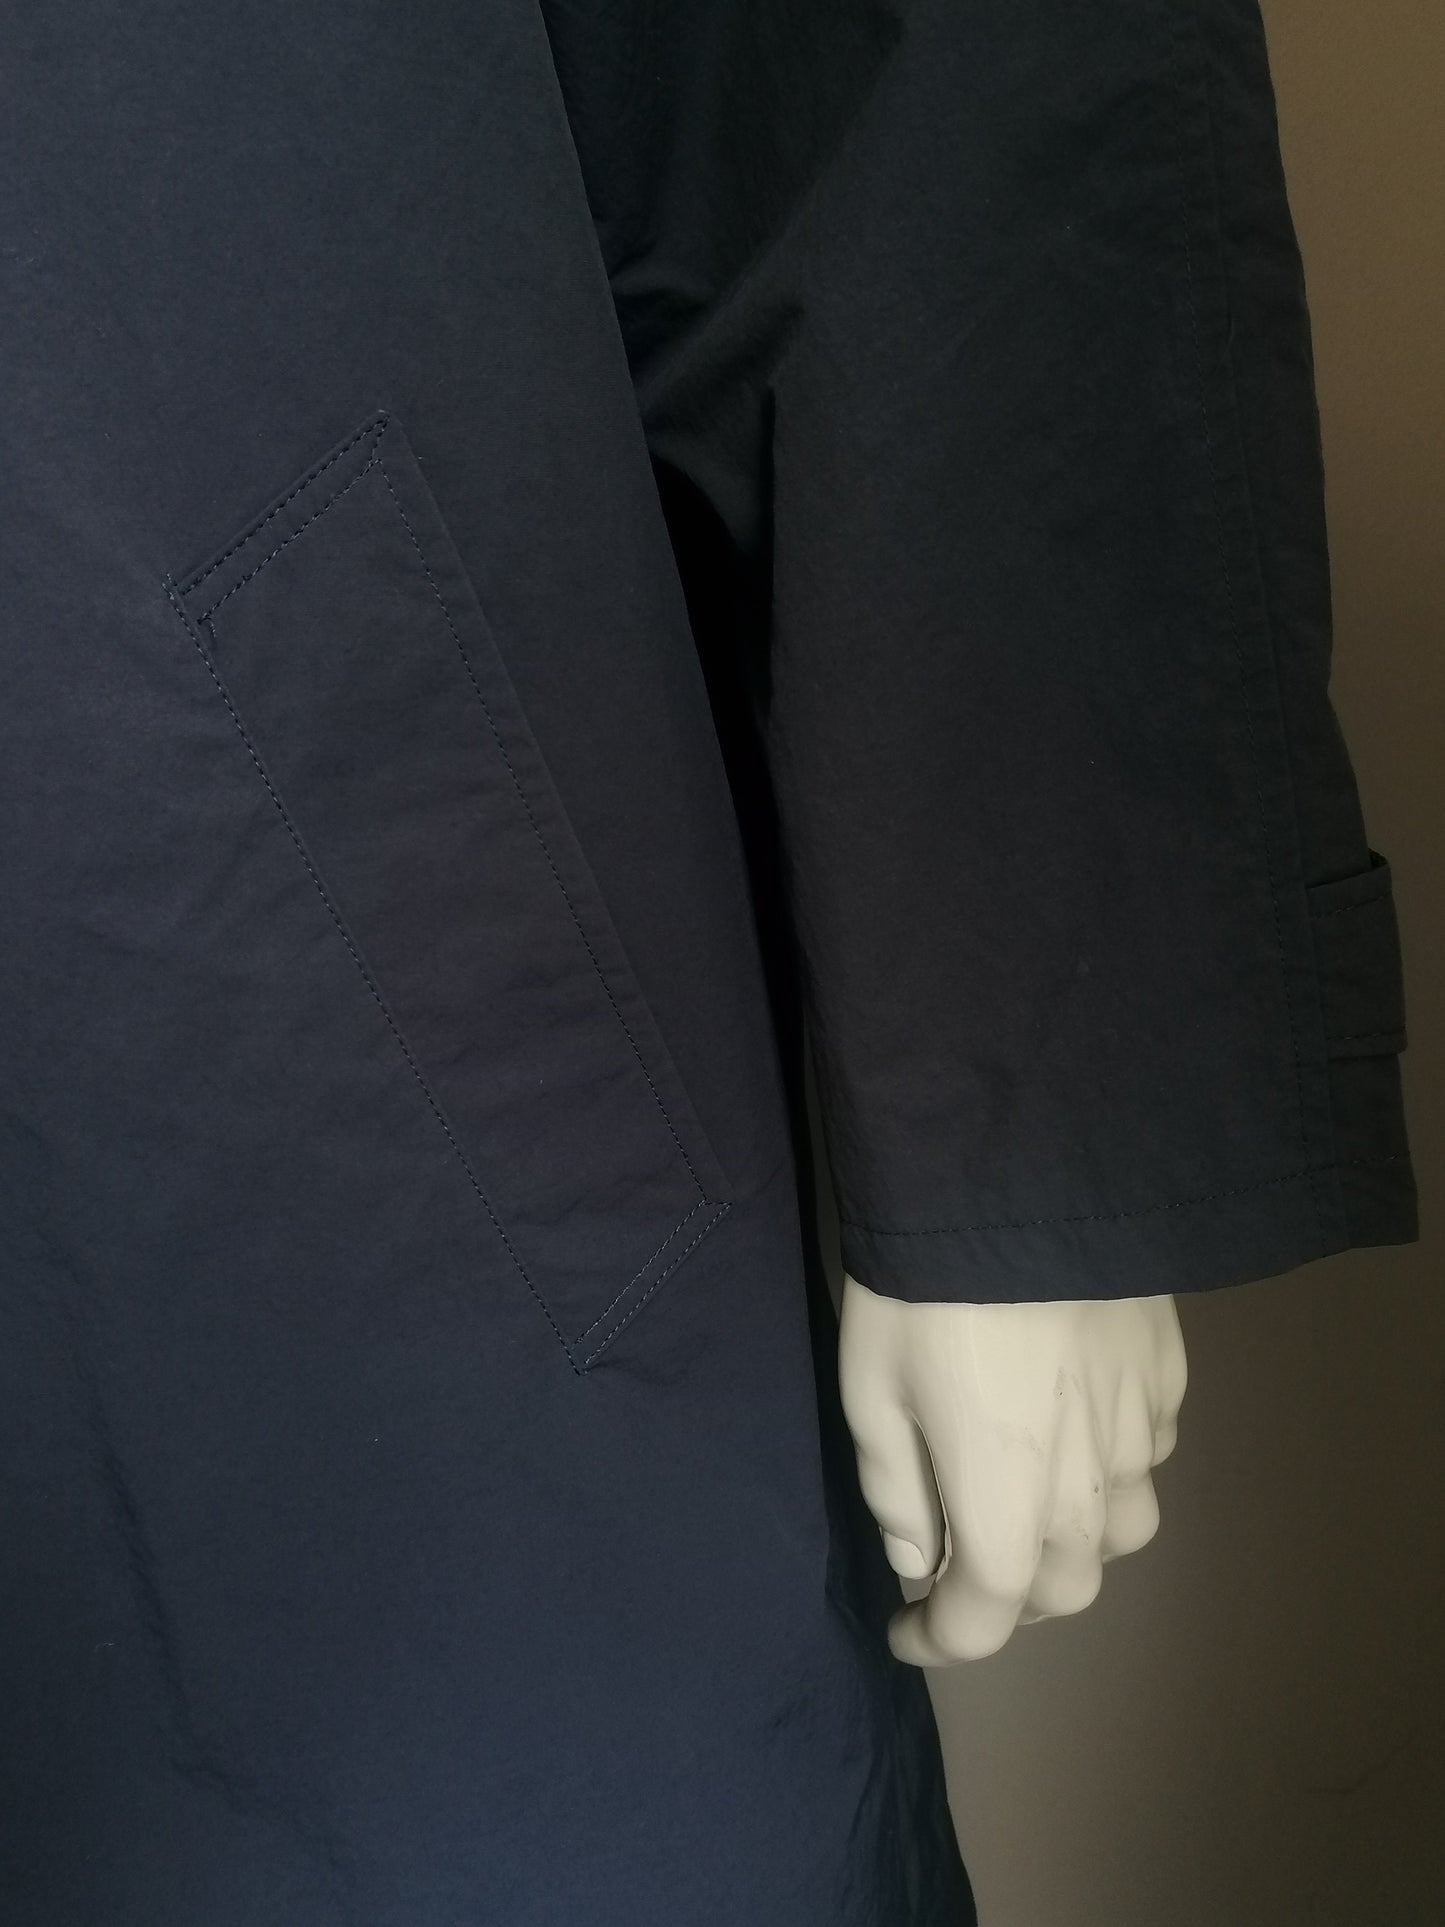 Manderley Mantel / Half -length Jacket. Dark blue colored. Size 98 / XL. (58/60)